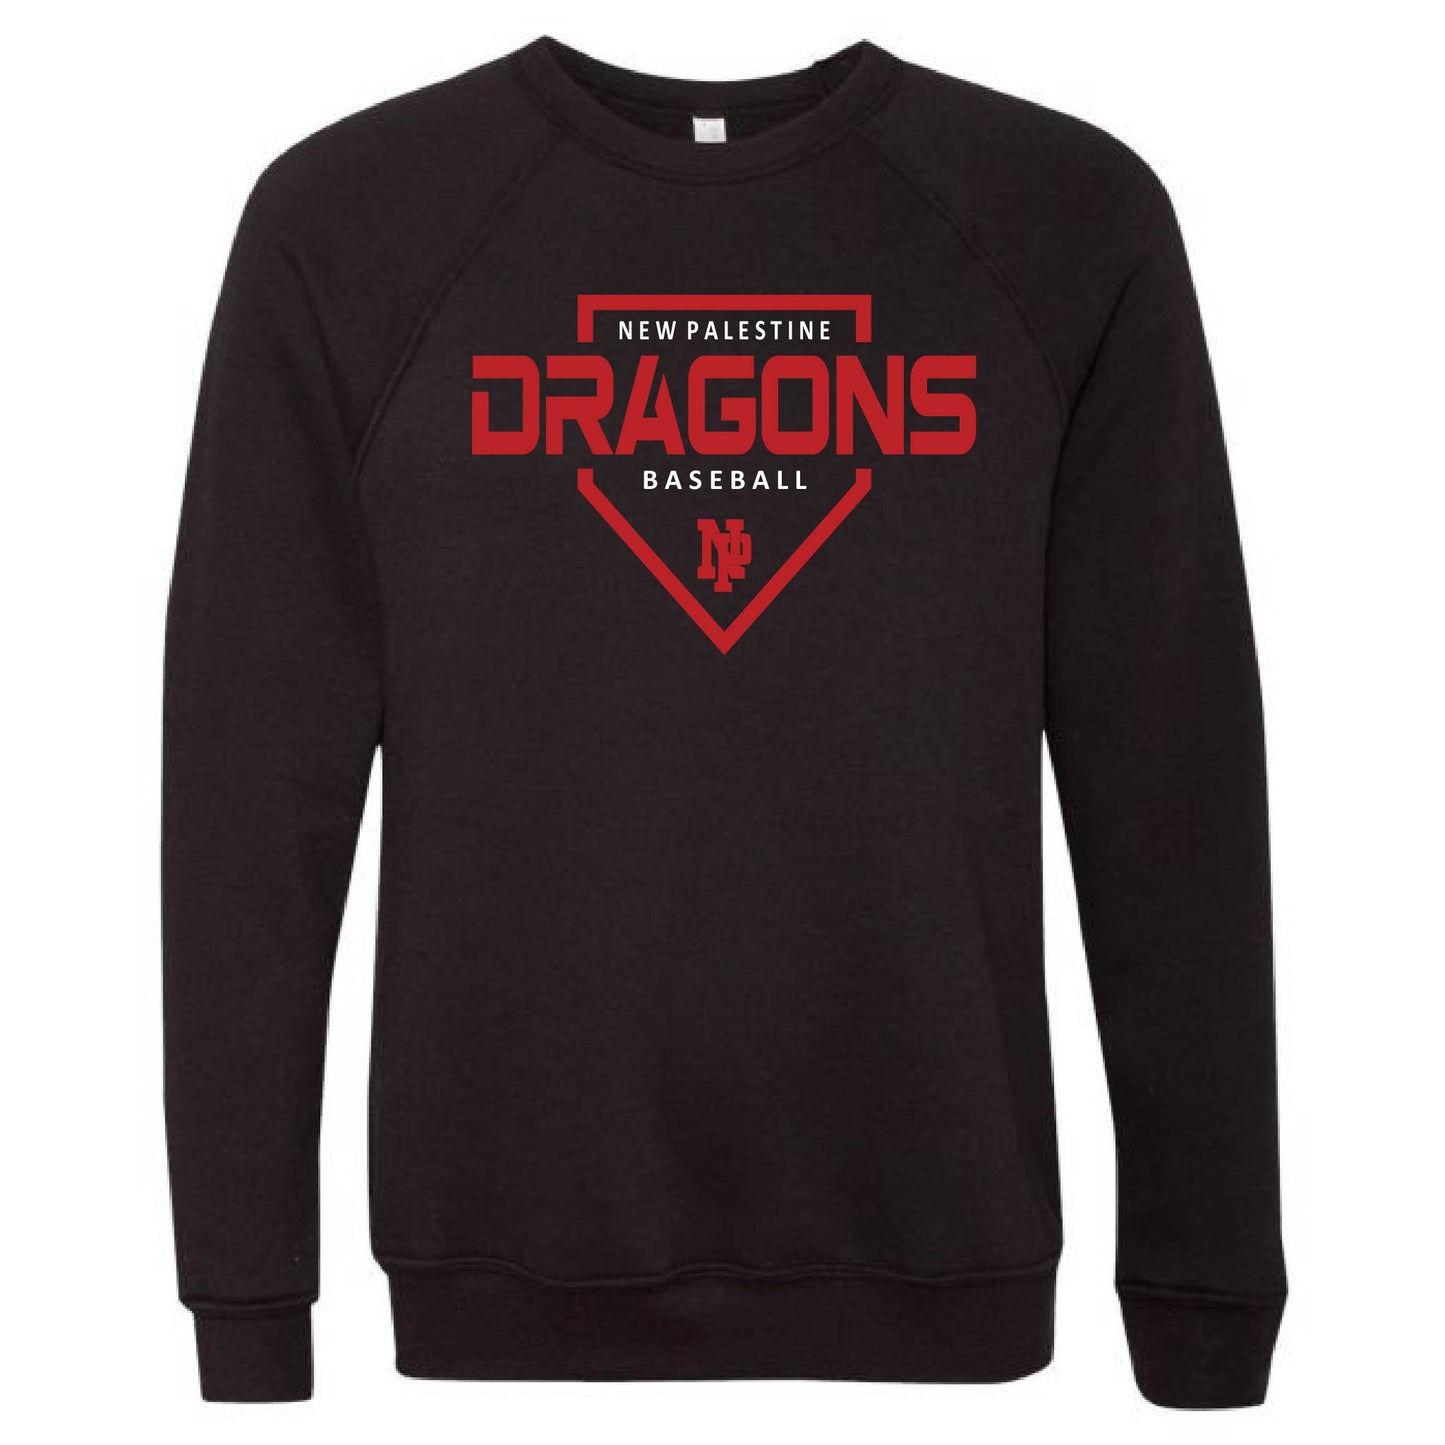 Unisex Sweatshirt - DRAGONS Baseball